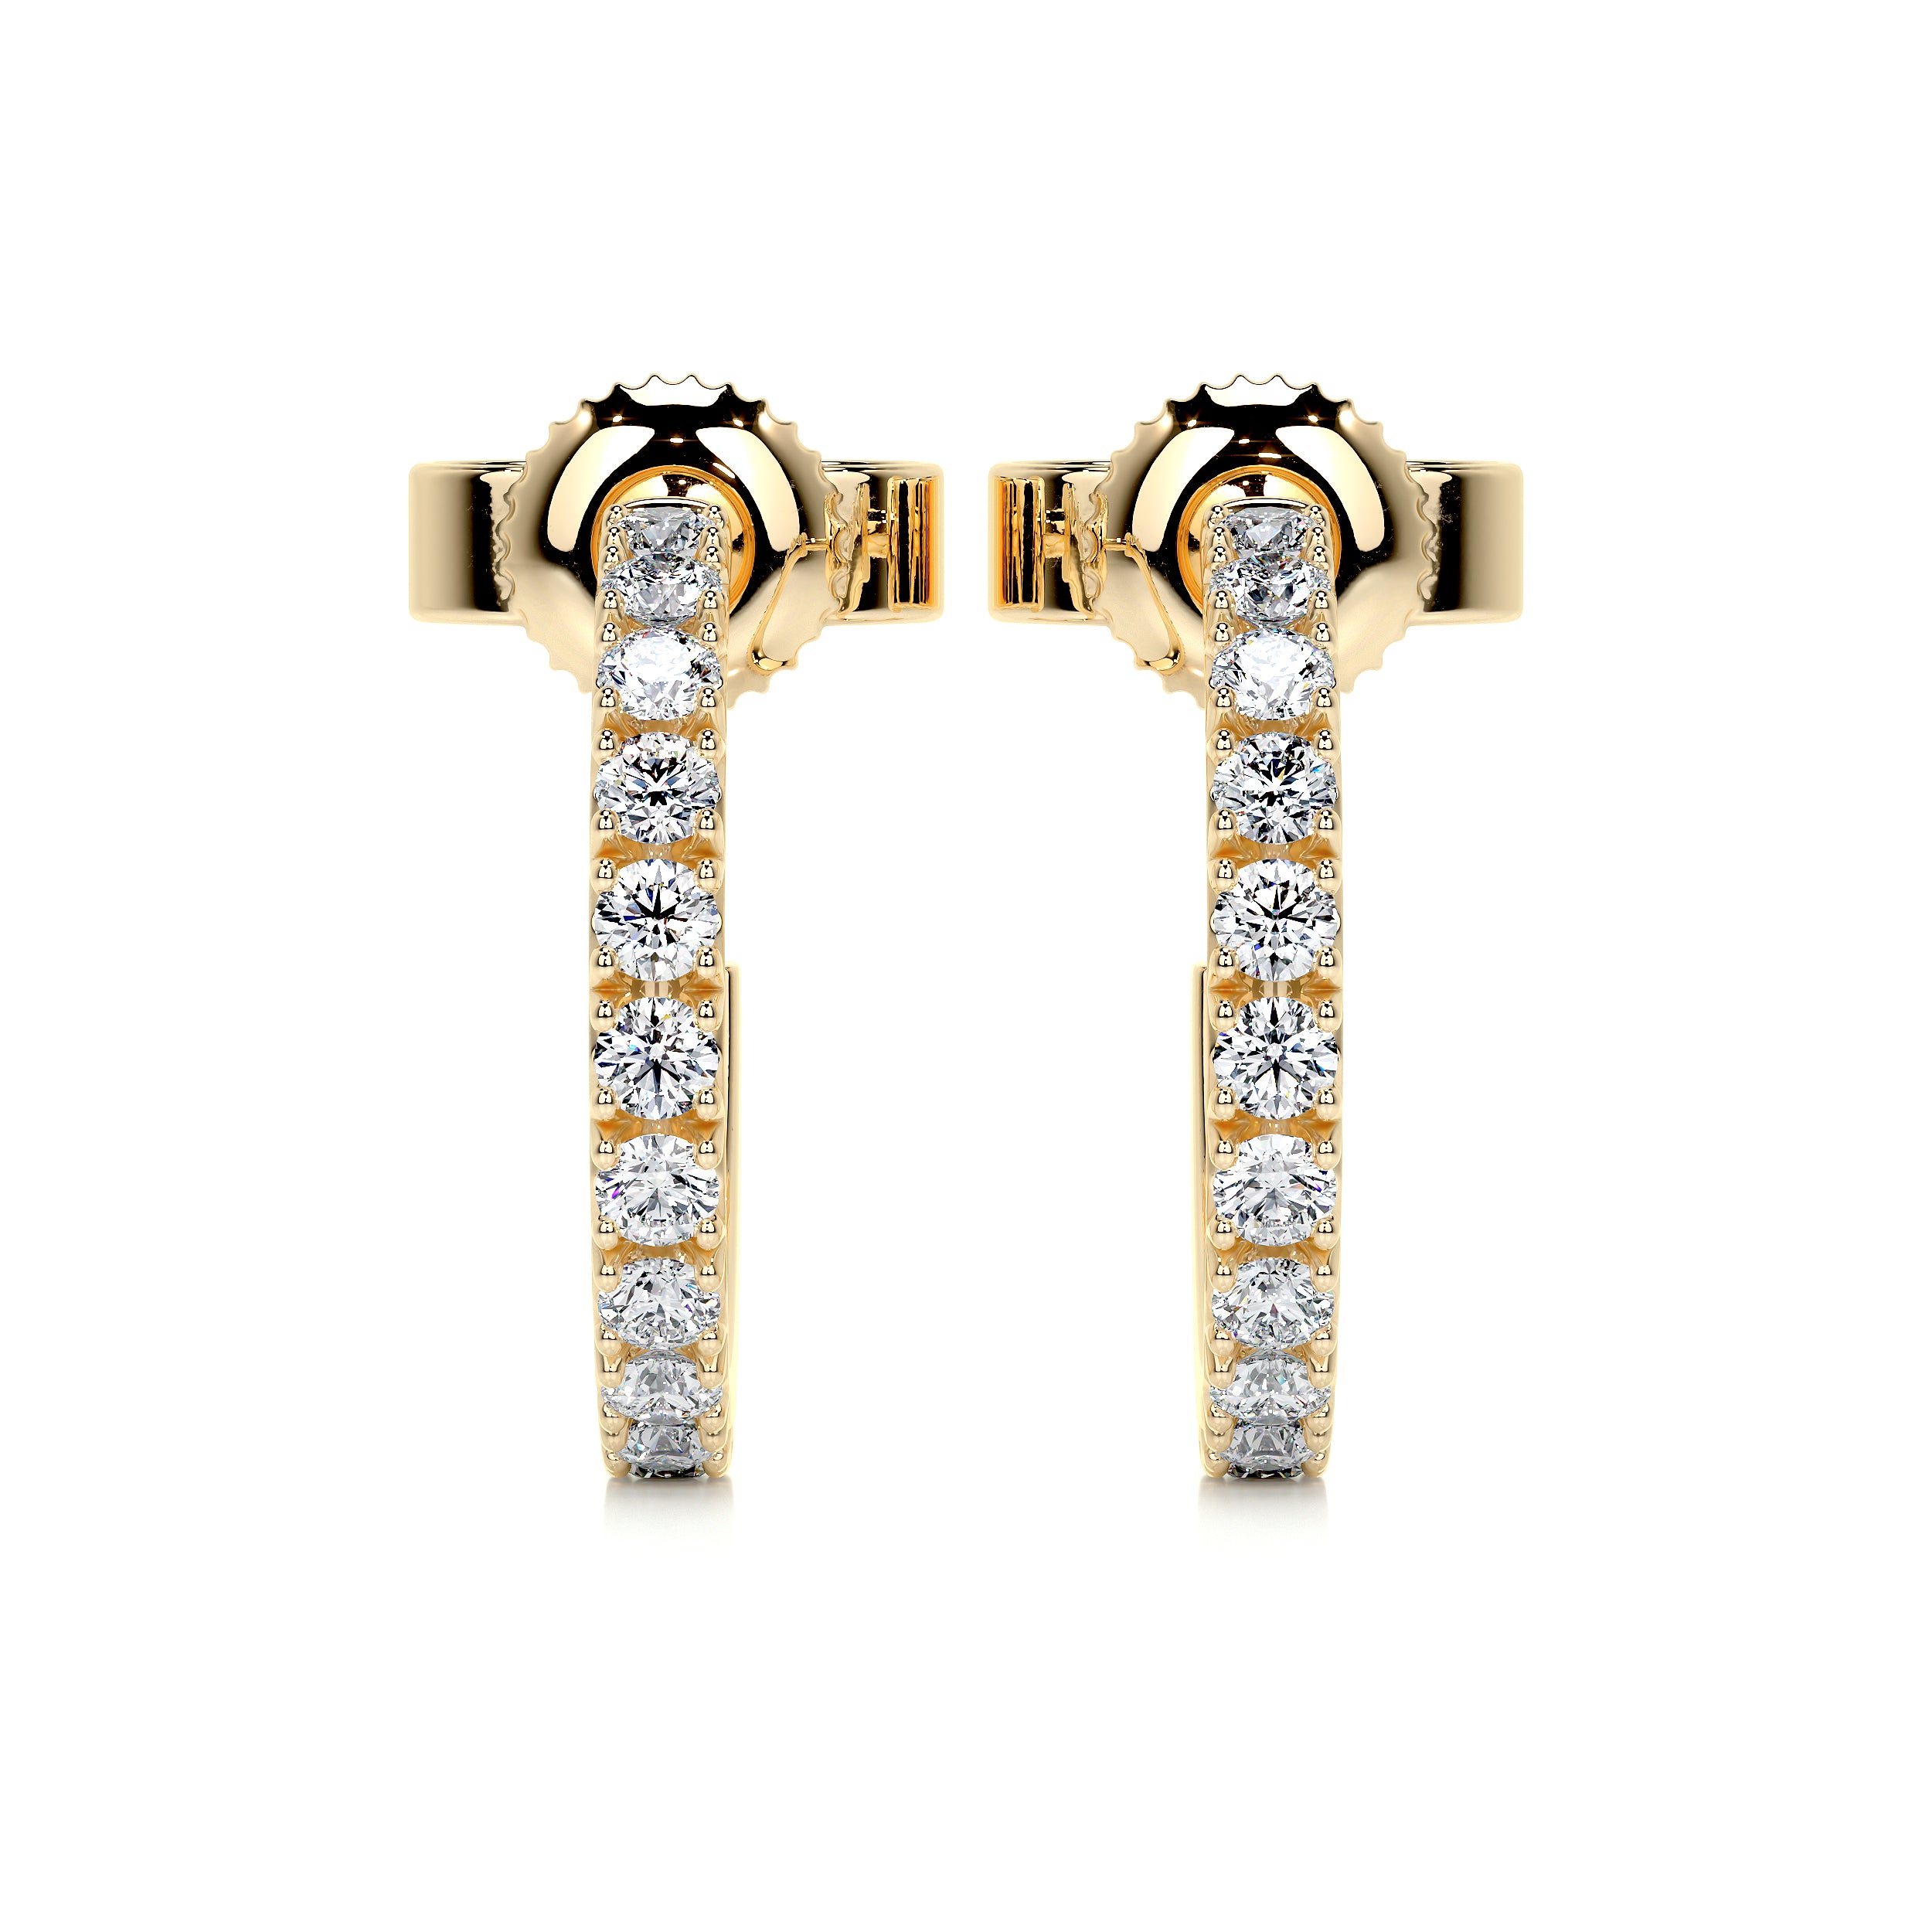 Nicole Diamond Earrings   (2.5 Carat) -18K Yellow Gold